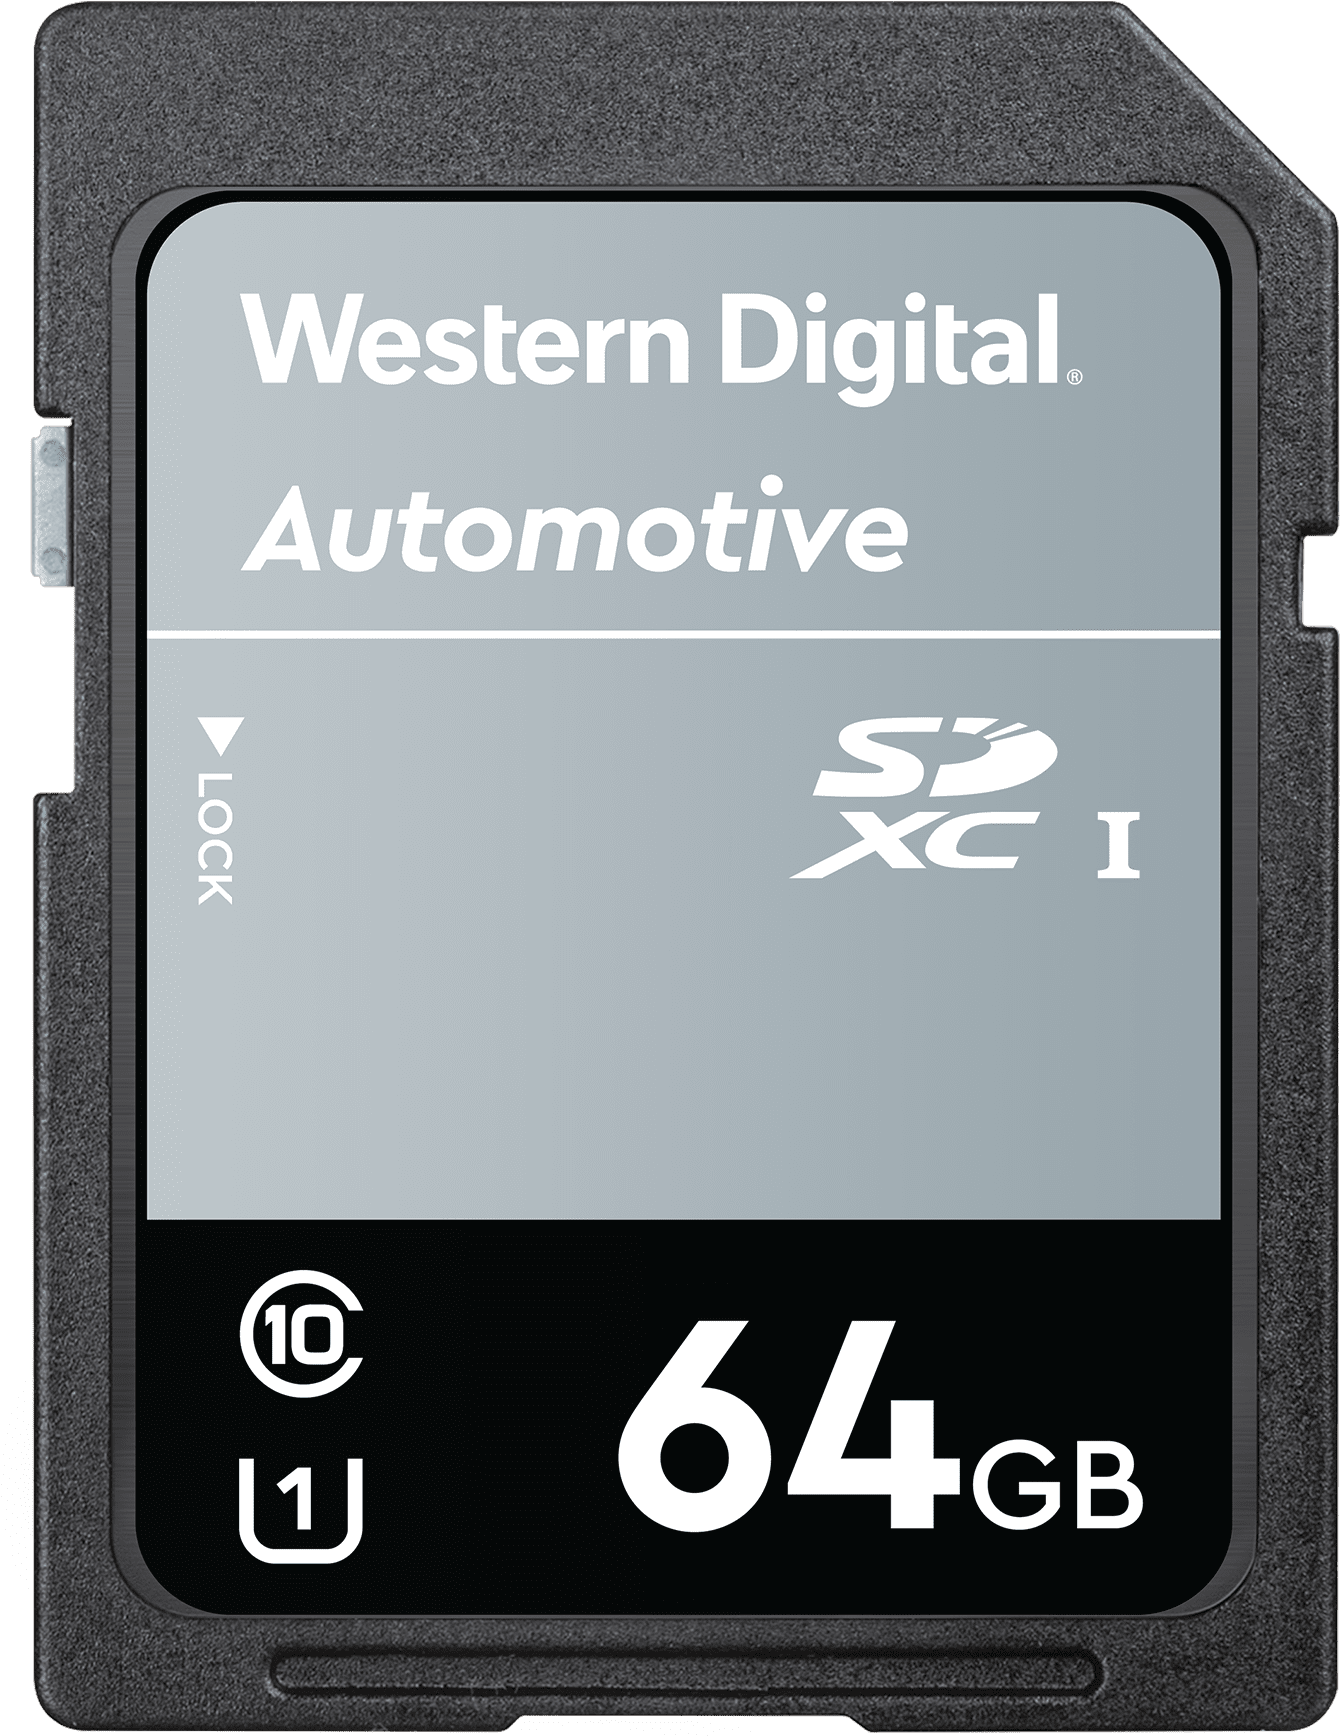 Western Digital Automotive S D X C64 G B Card PNG image